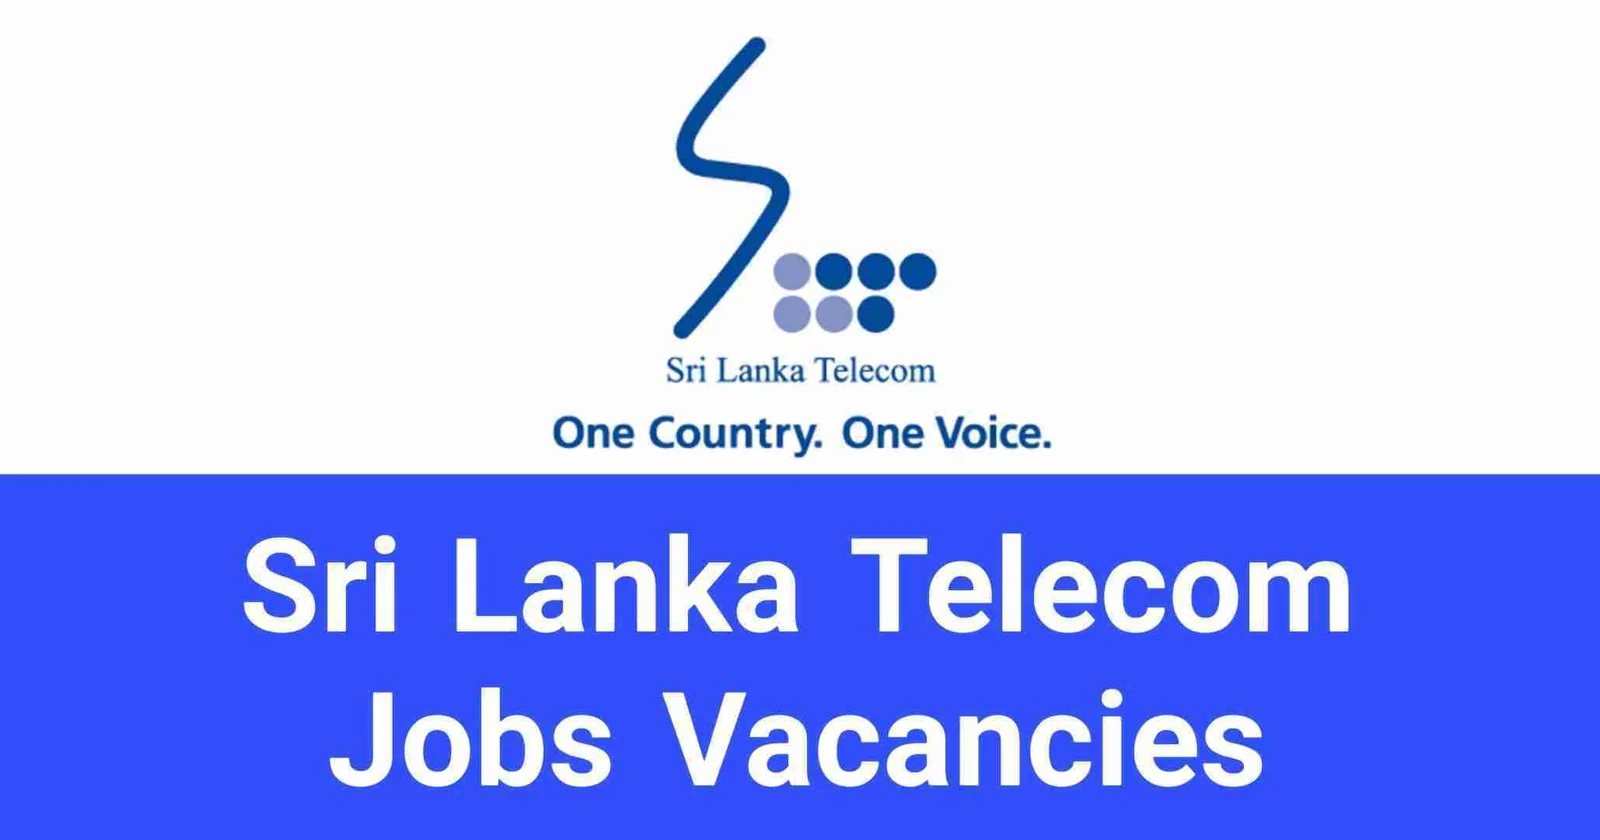 Sri Lanka Telecom Jobs Vacancies